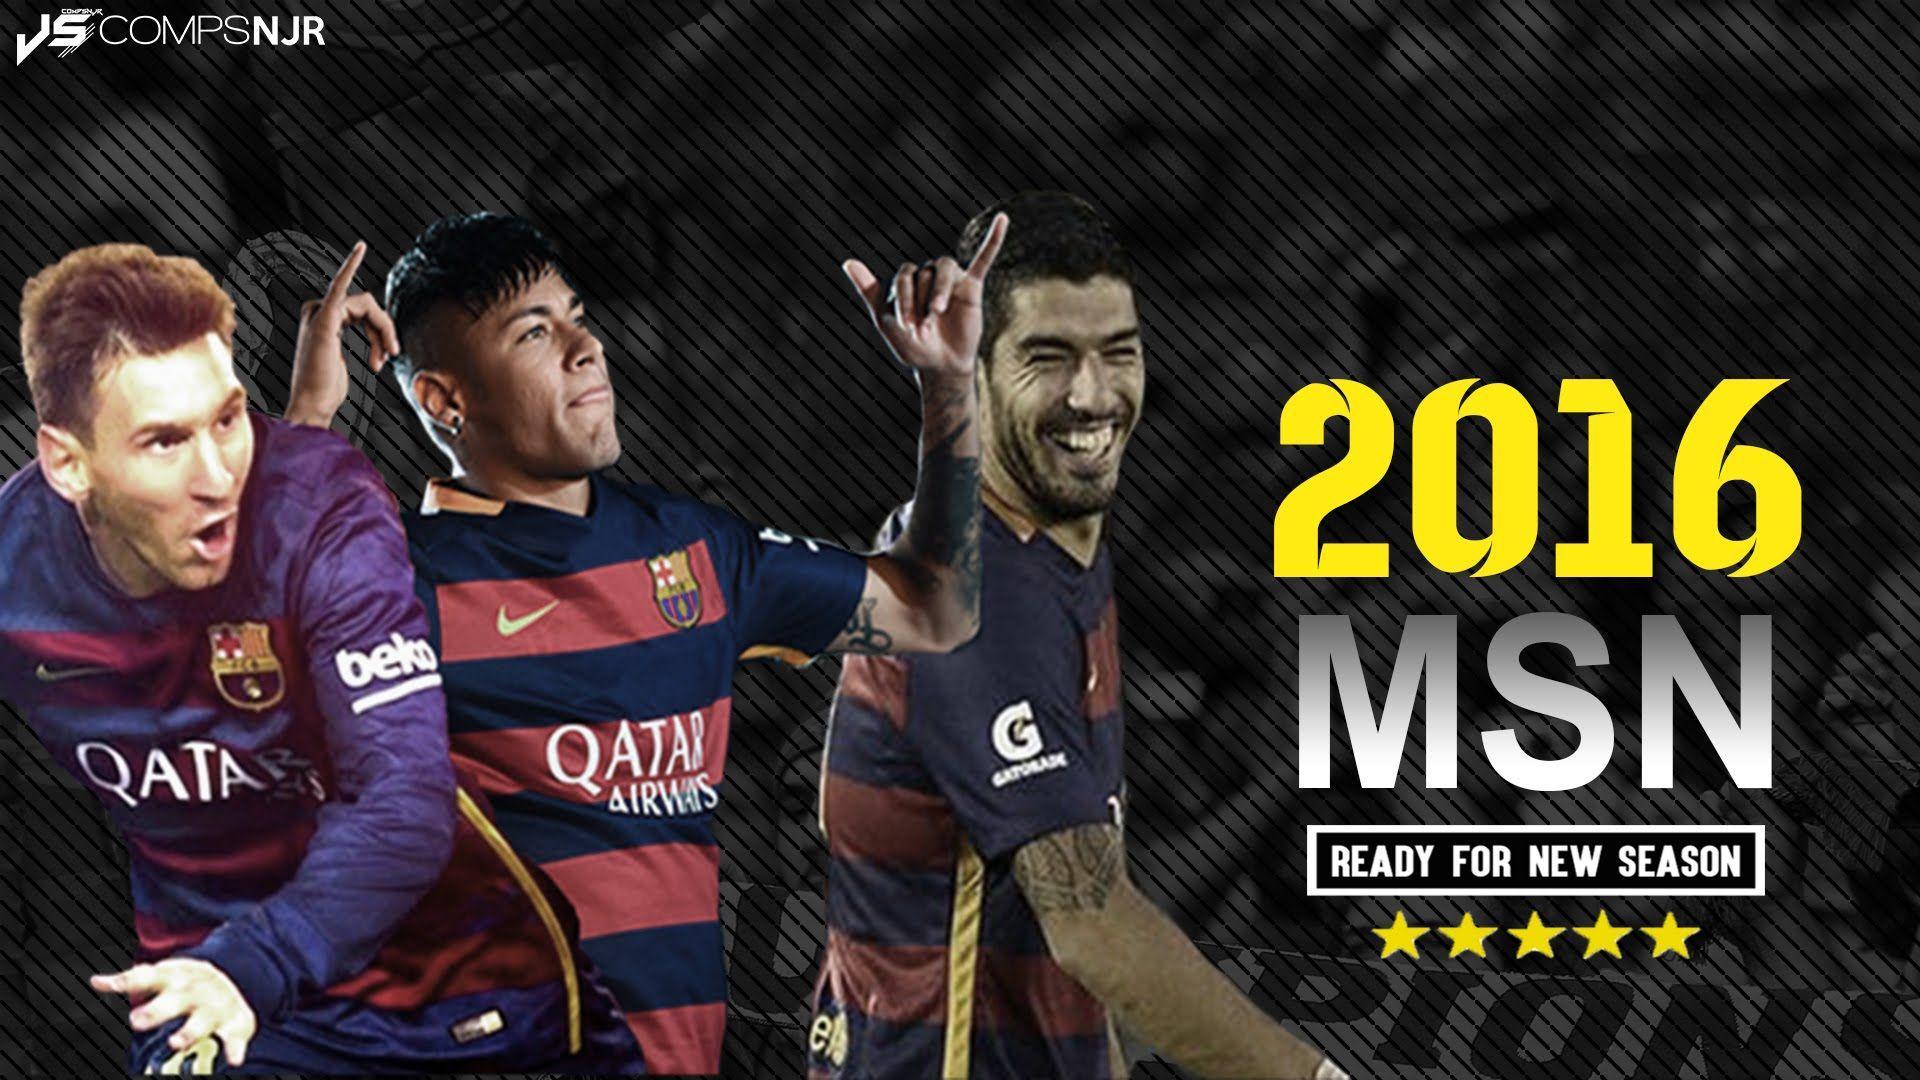 MSN Show ● Messi, Suarez & Neymar ● Ready For 2015 2016 Season